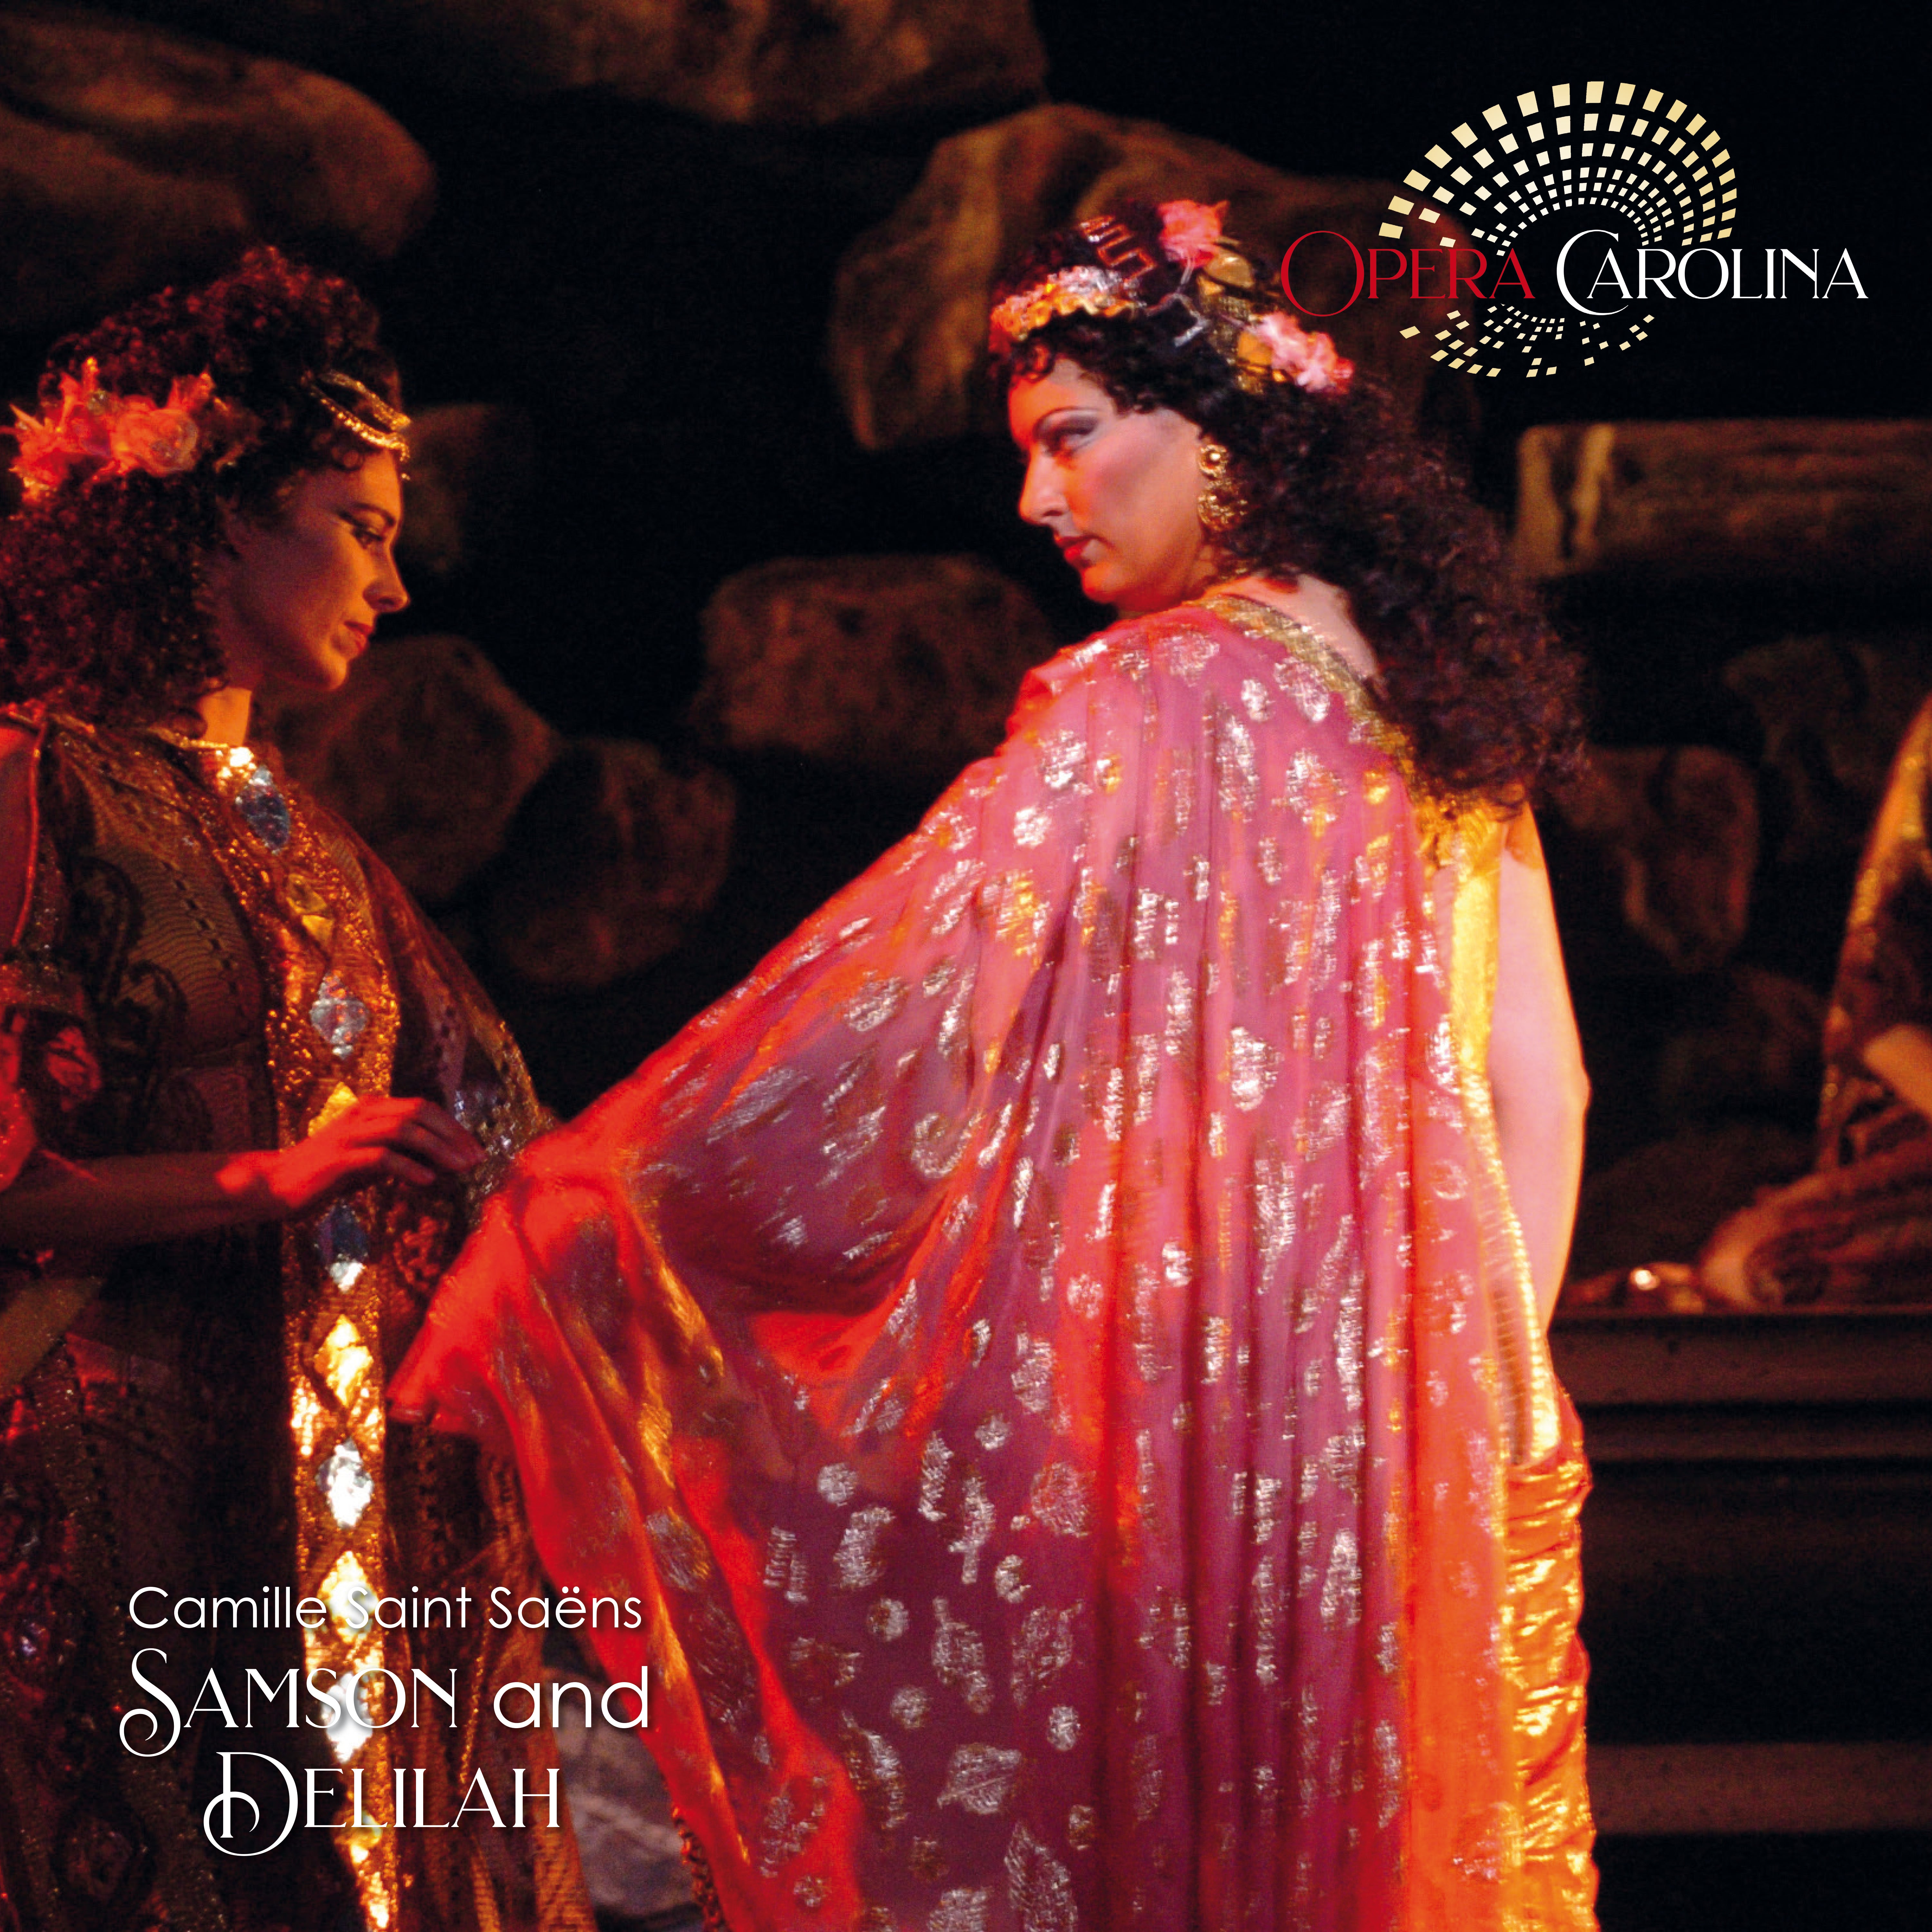 Opera Carolina - Samson and Delilah